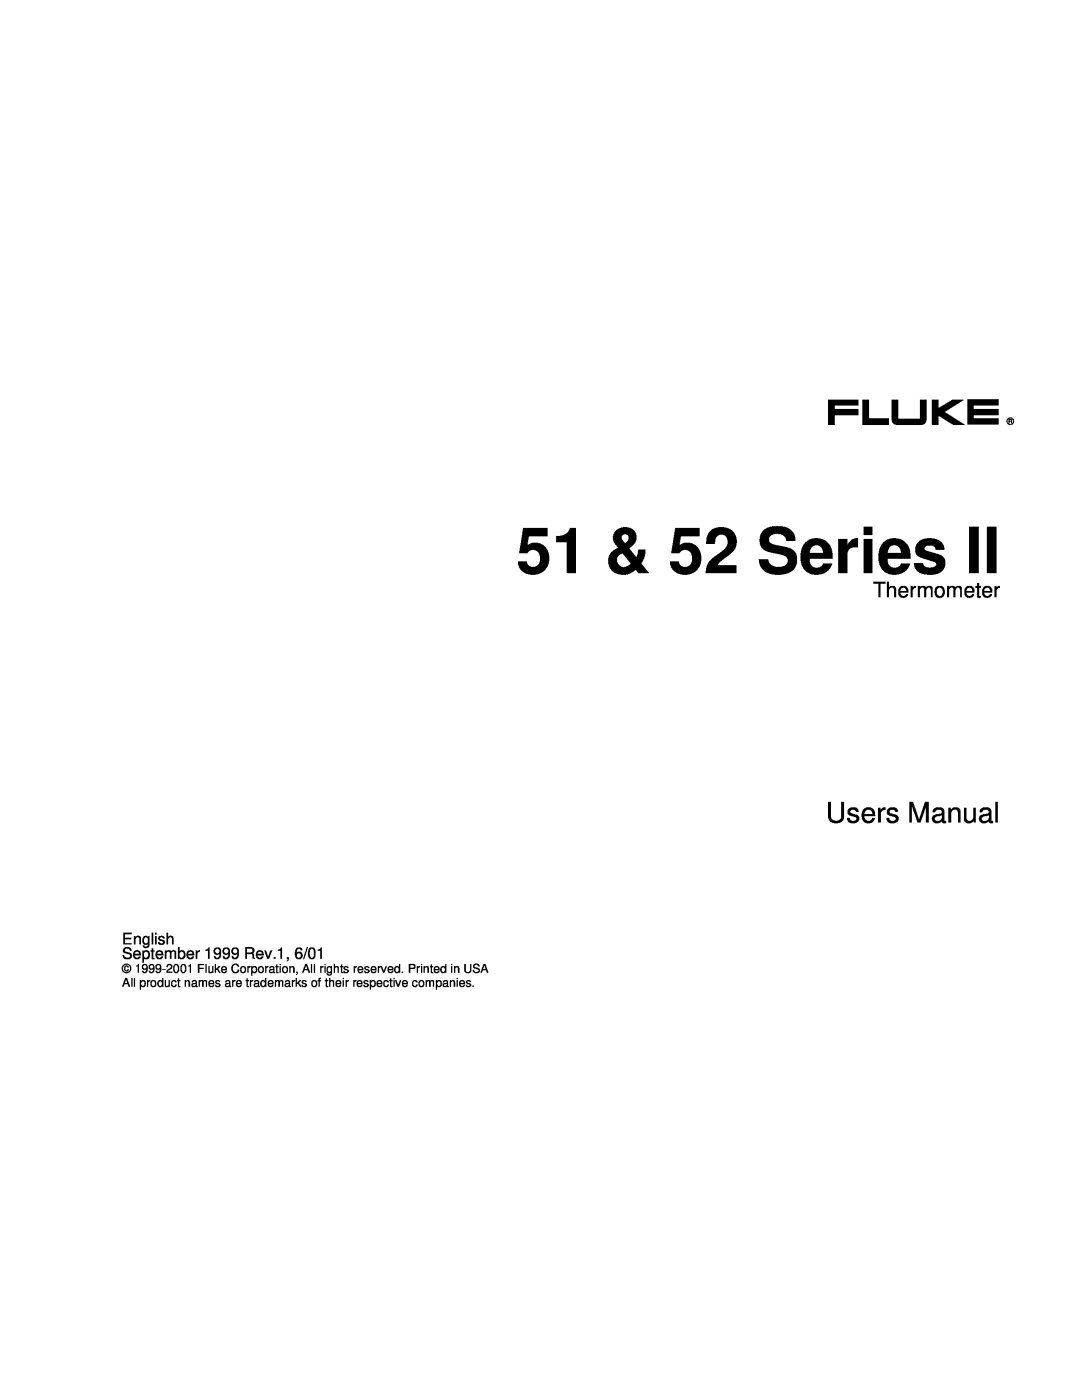 Fluke 51 Series user manual 51 & 52 Series, Users Manual, Thermometer 